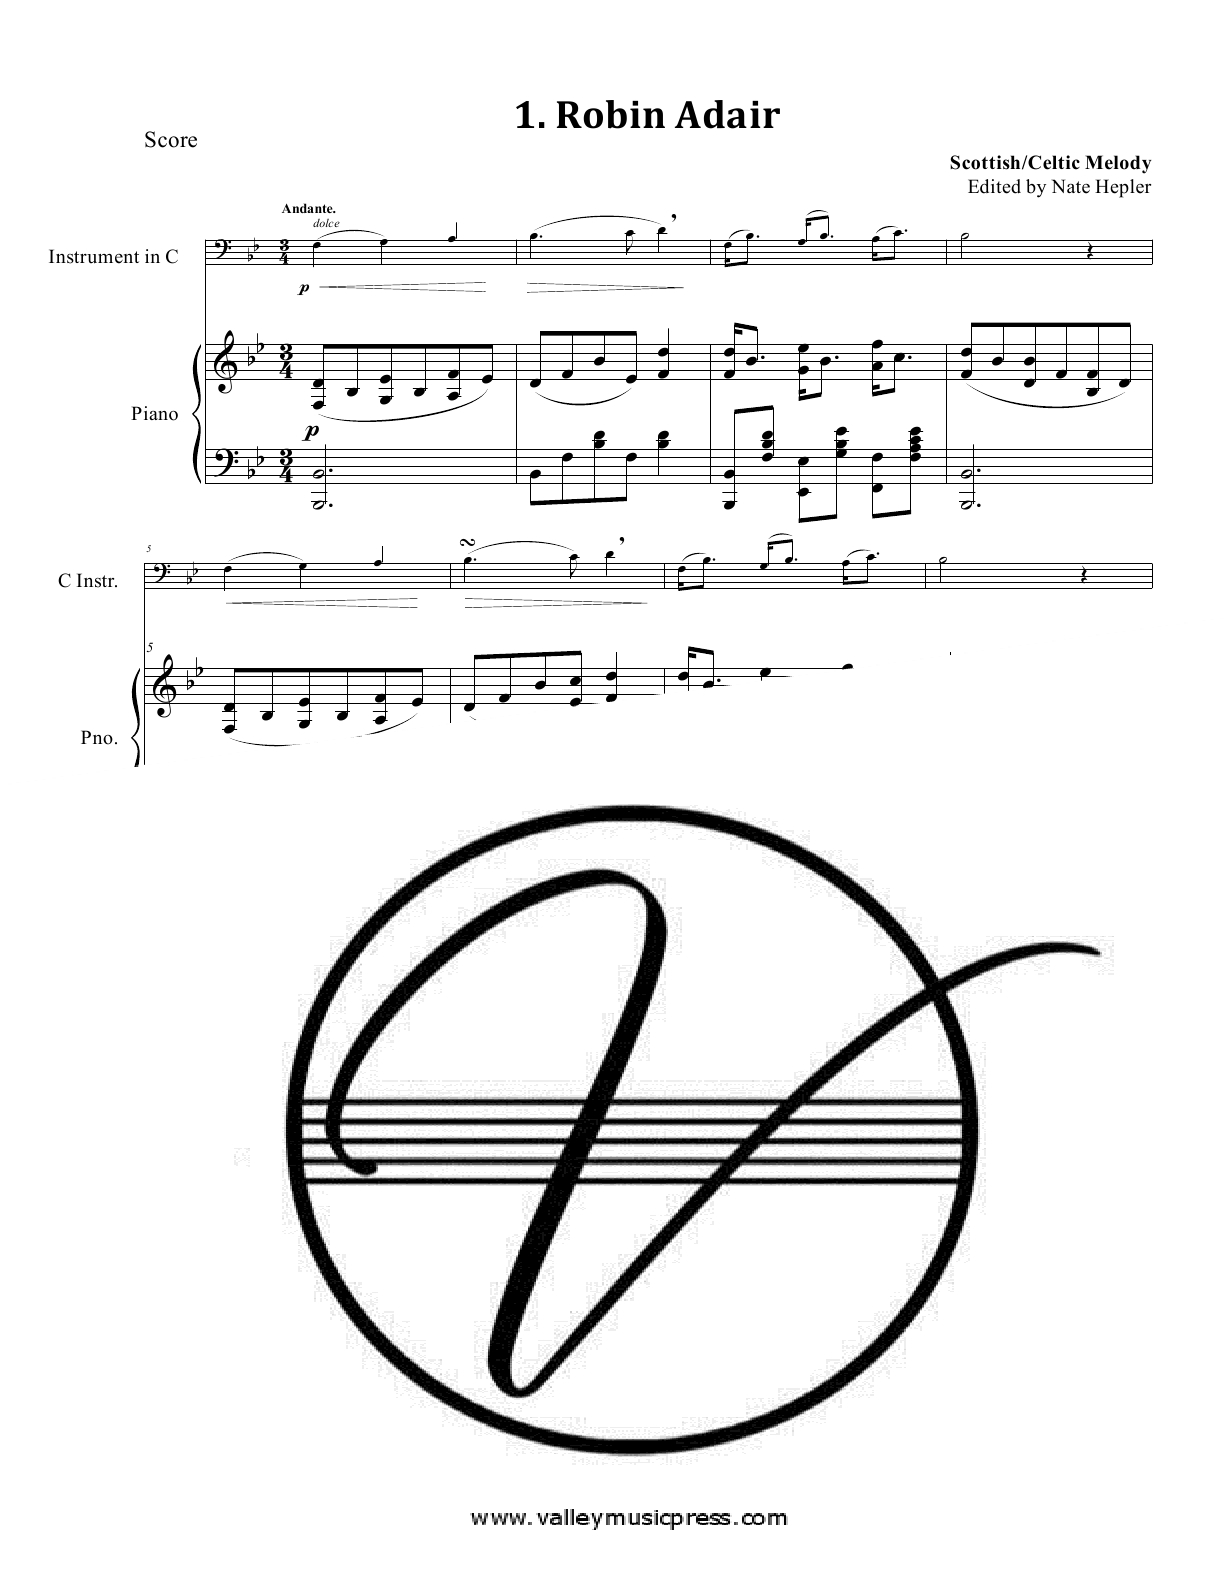 Arban Art of Phrasing Piano Accompaniment Vol. 1 No. 1-25 (Trb)